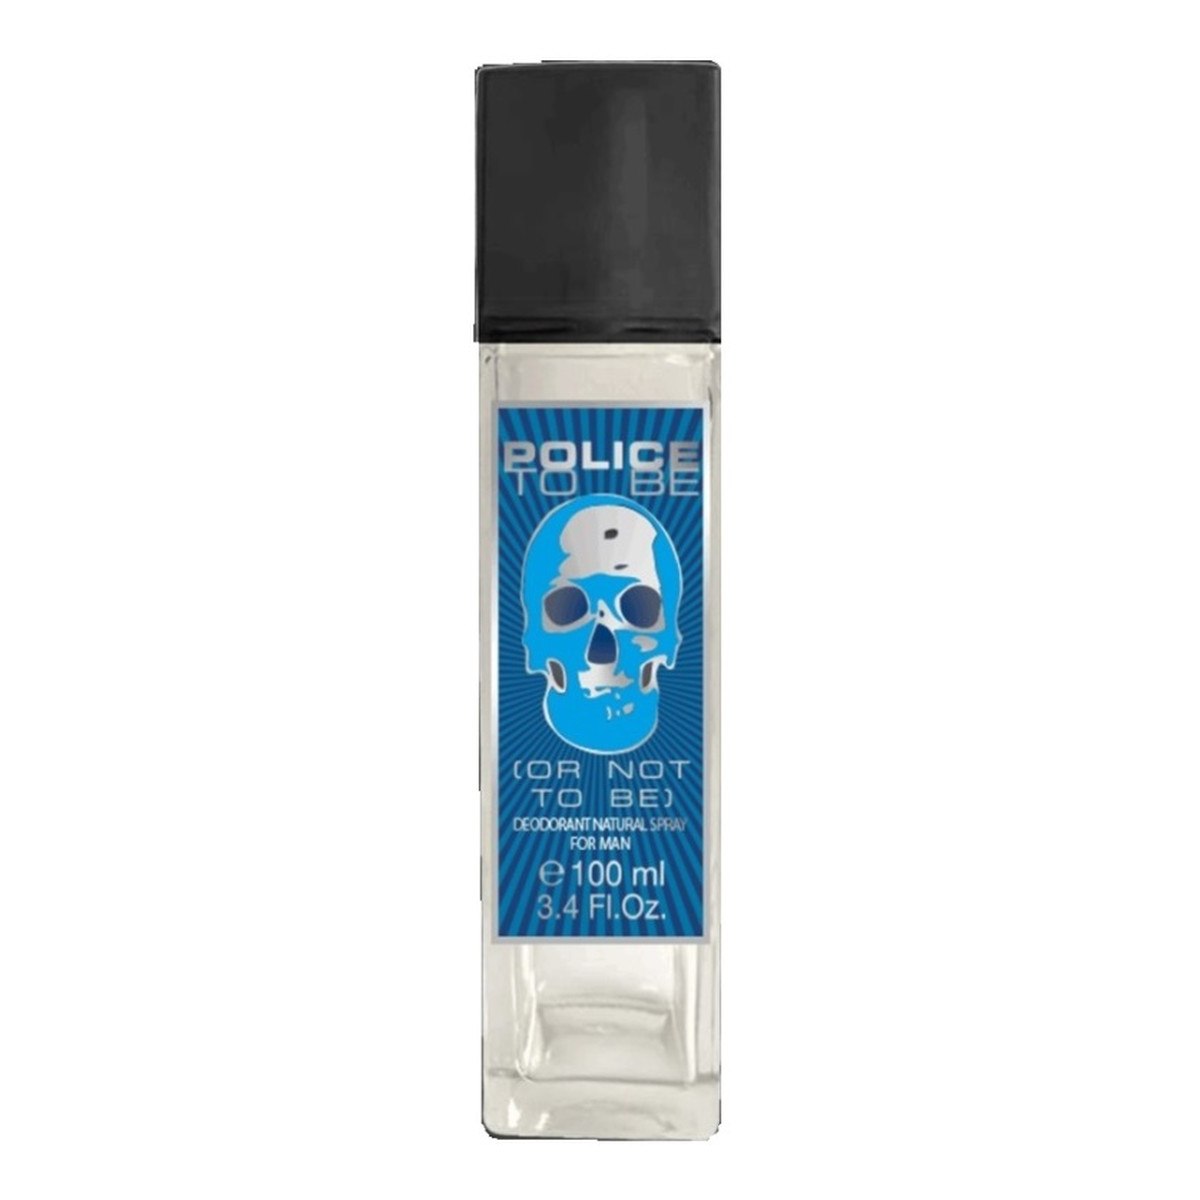 Police To Be Dezodorant spray glass 100ml